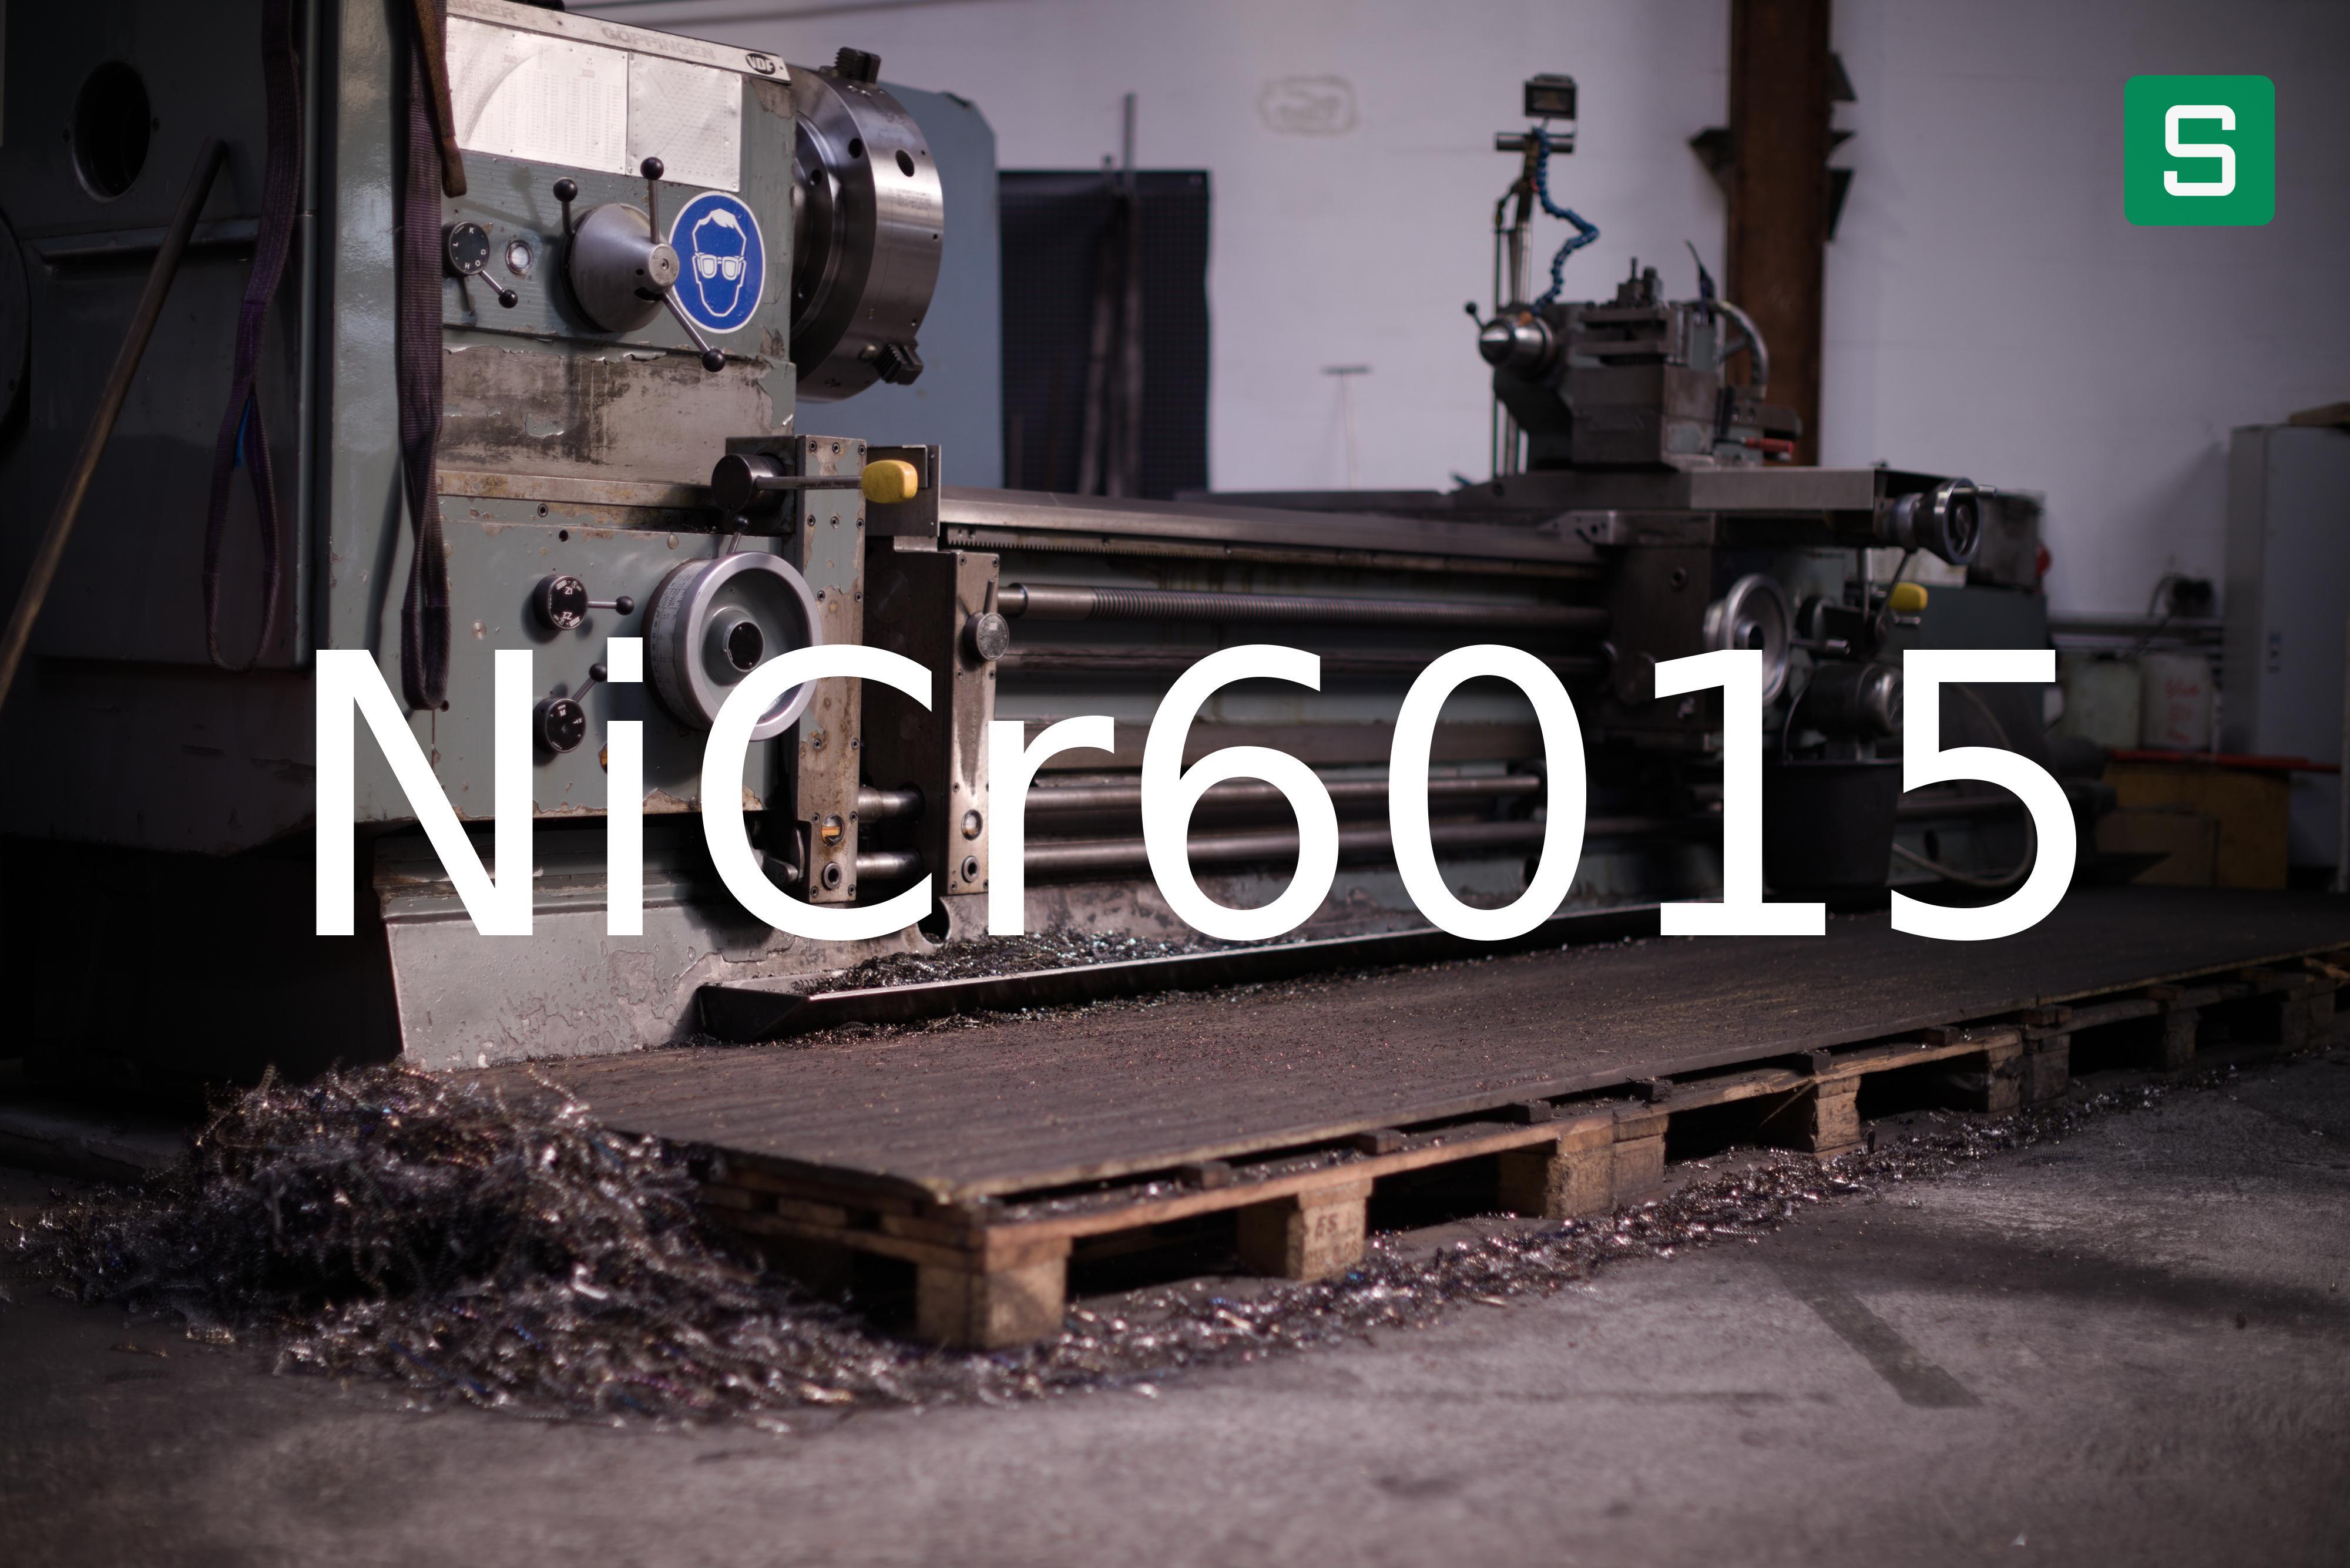 Steel Material: NiCr6015